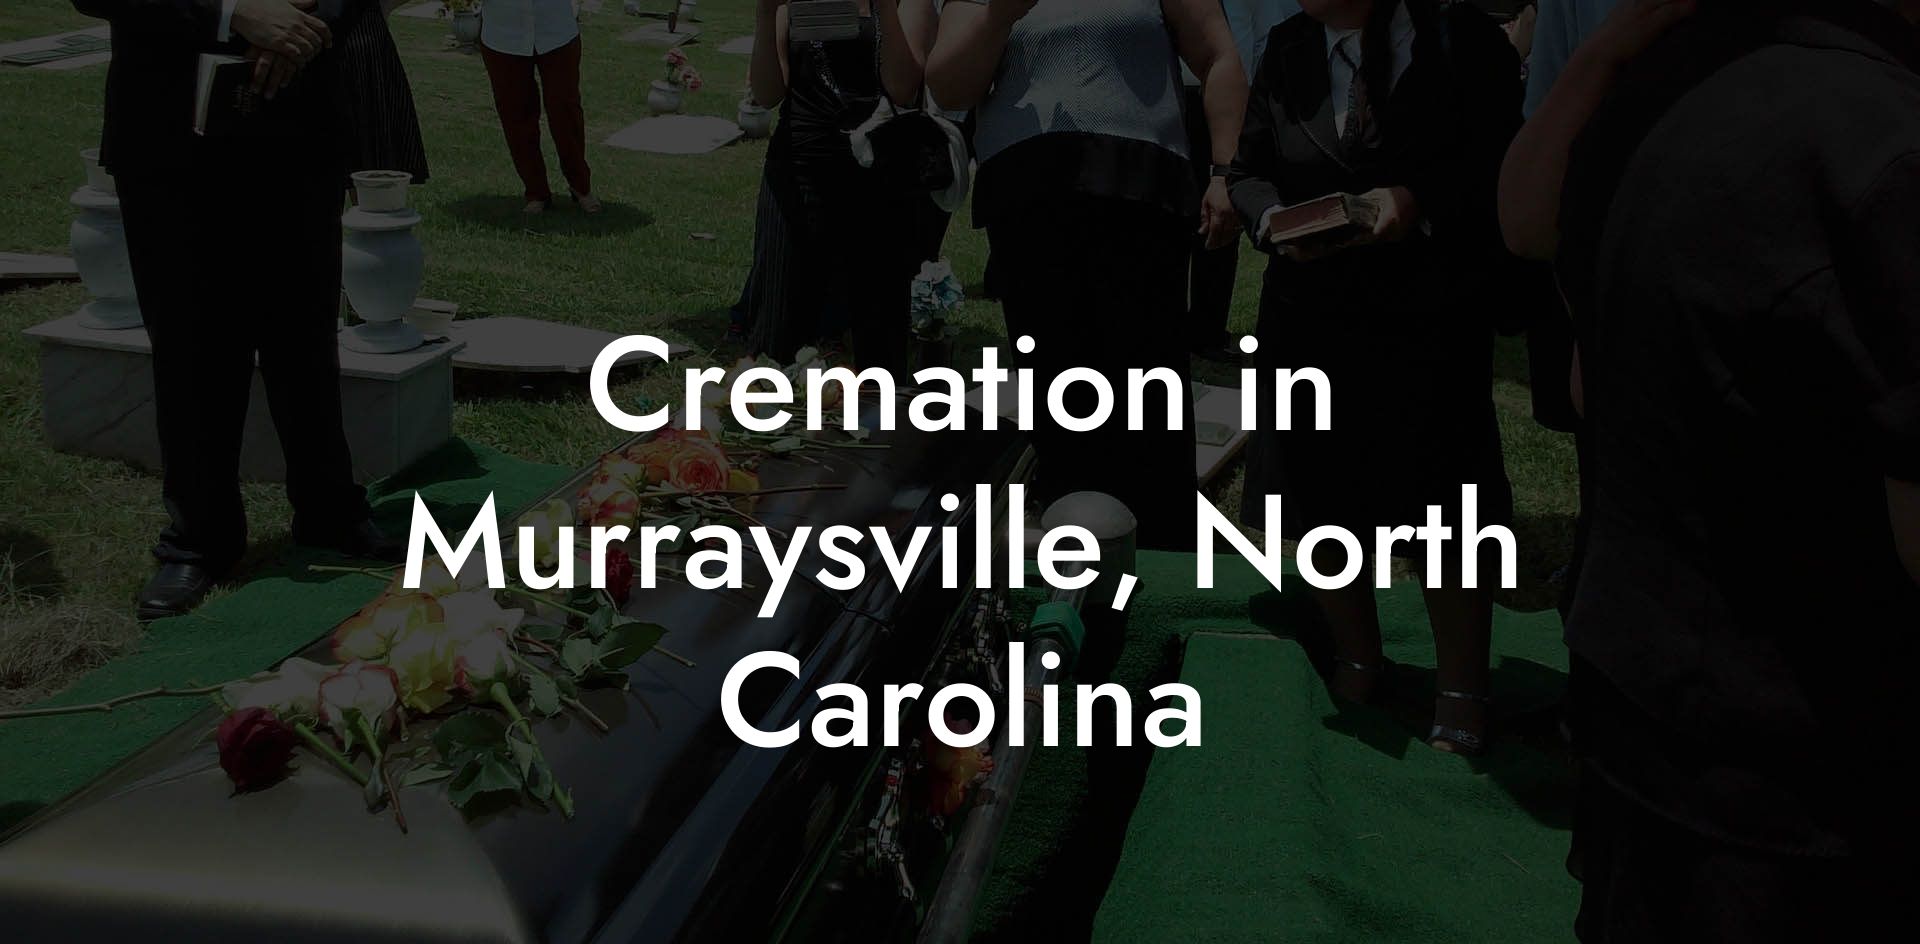 Cremation in Murraysville, North Carolina